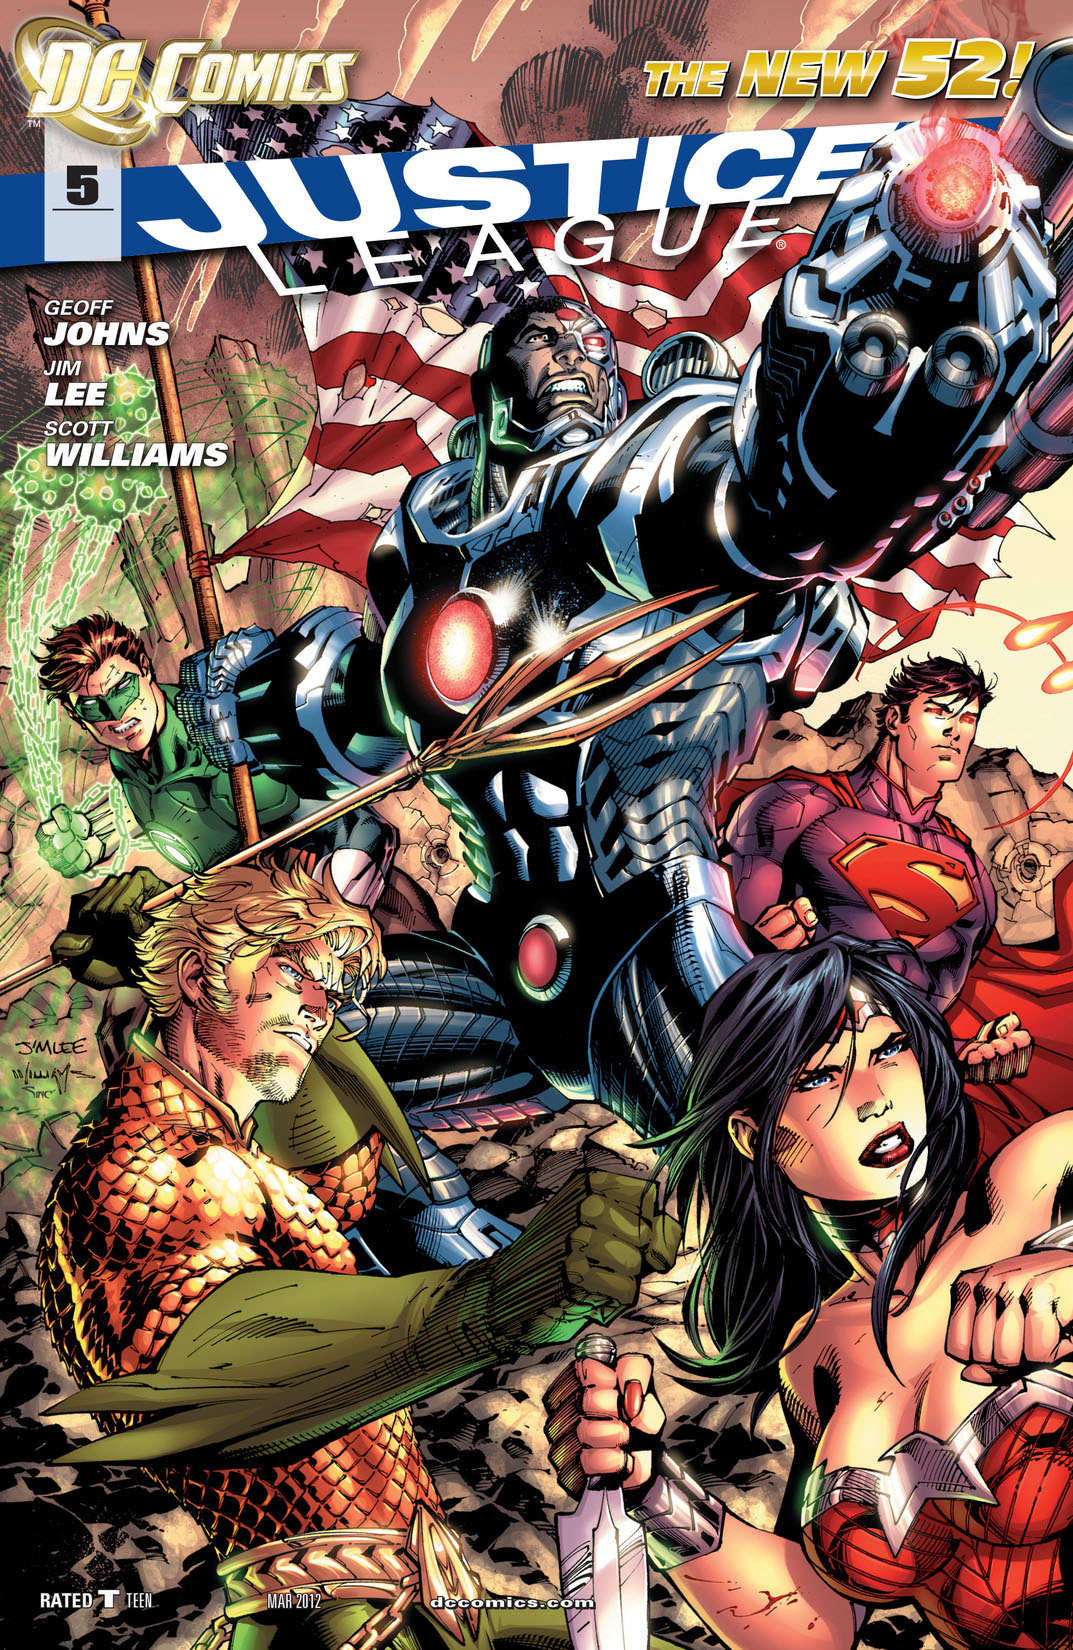 Justice League (2011-) #5 preview images